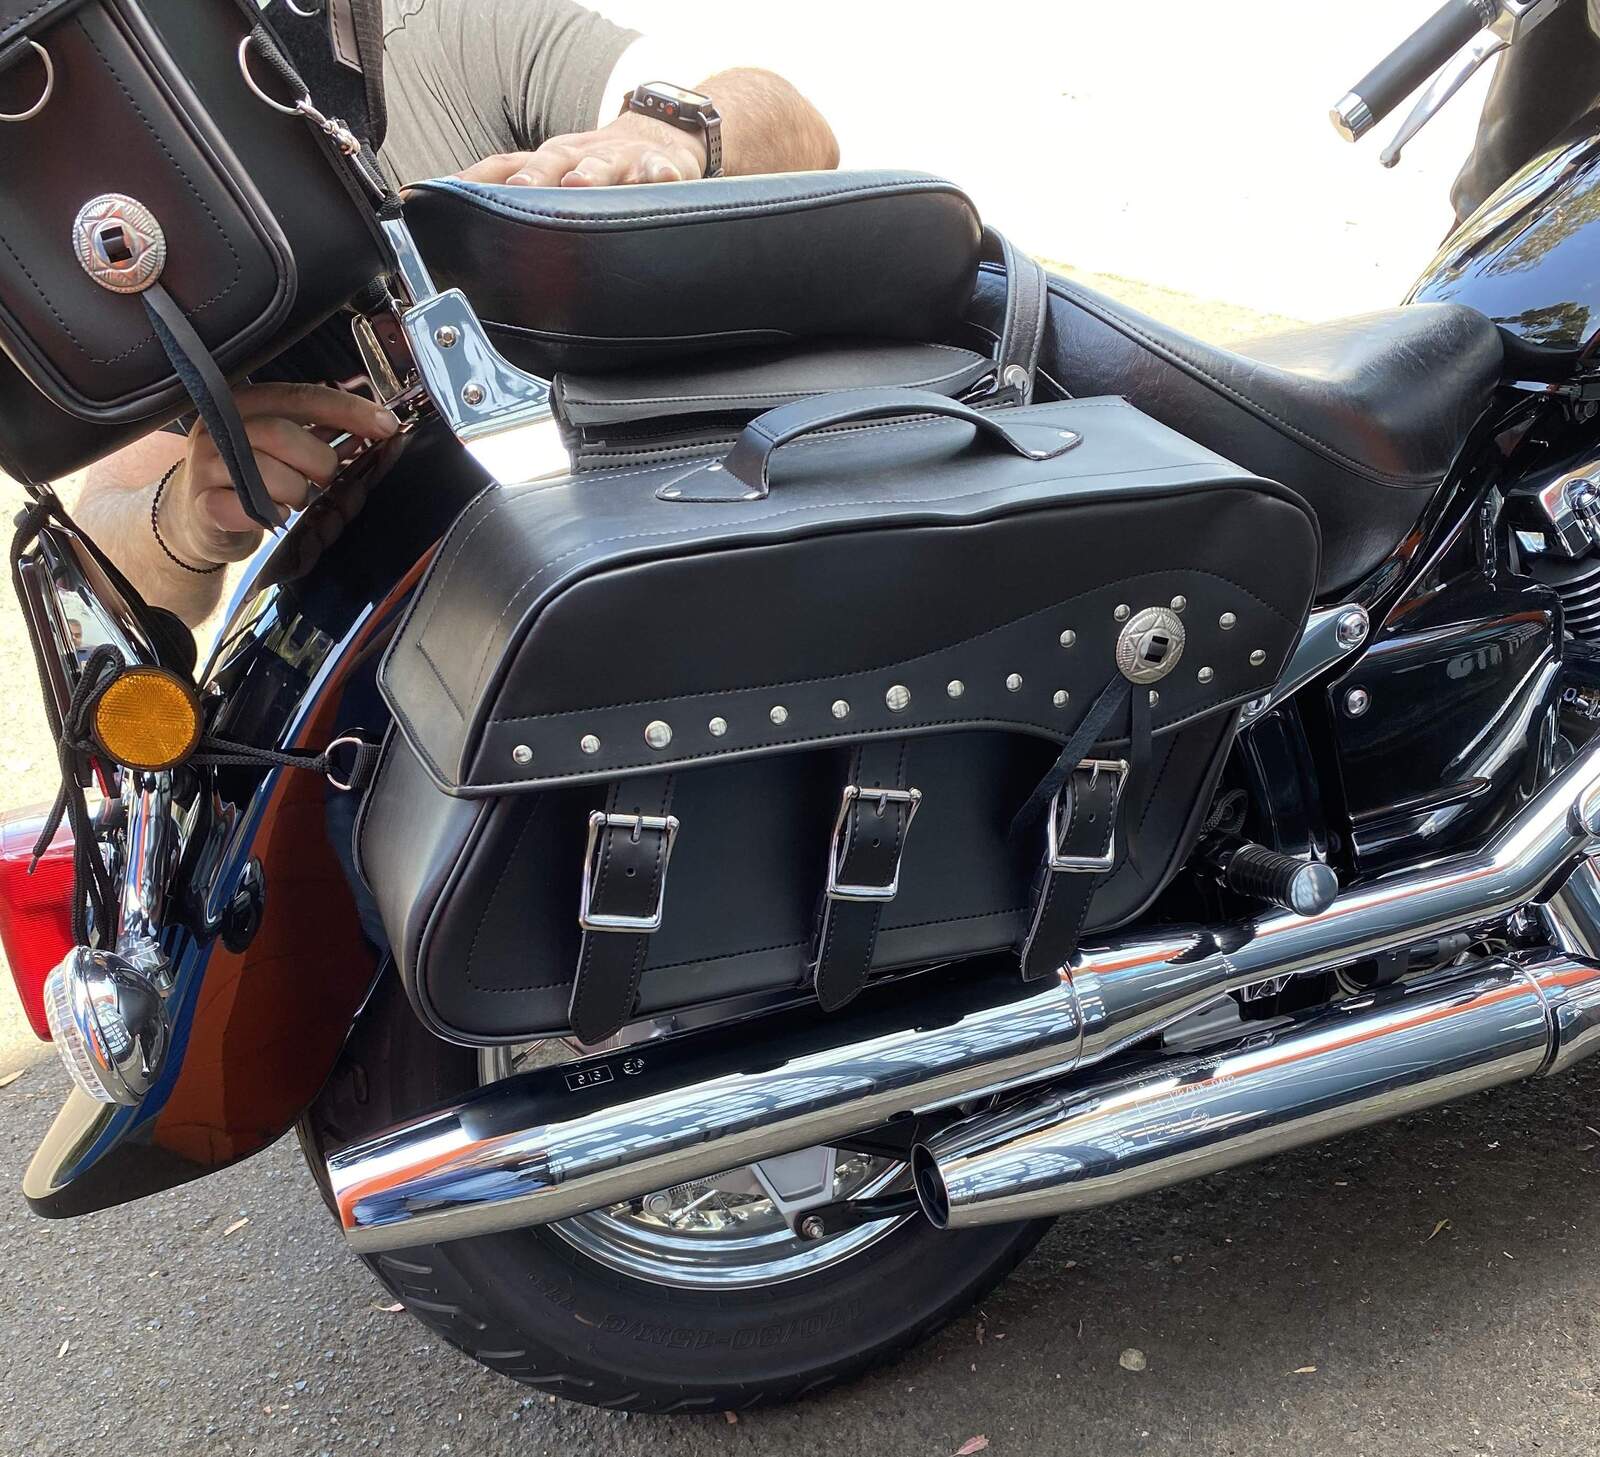 Bikers Gear Australia Fender 3 Buckle Leather Motorcycle Saddlebags Pair PLAIN